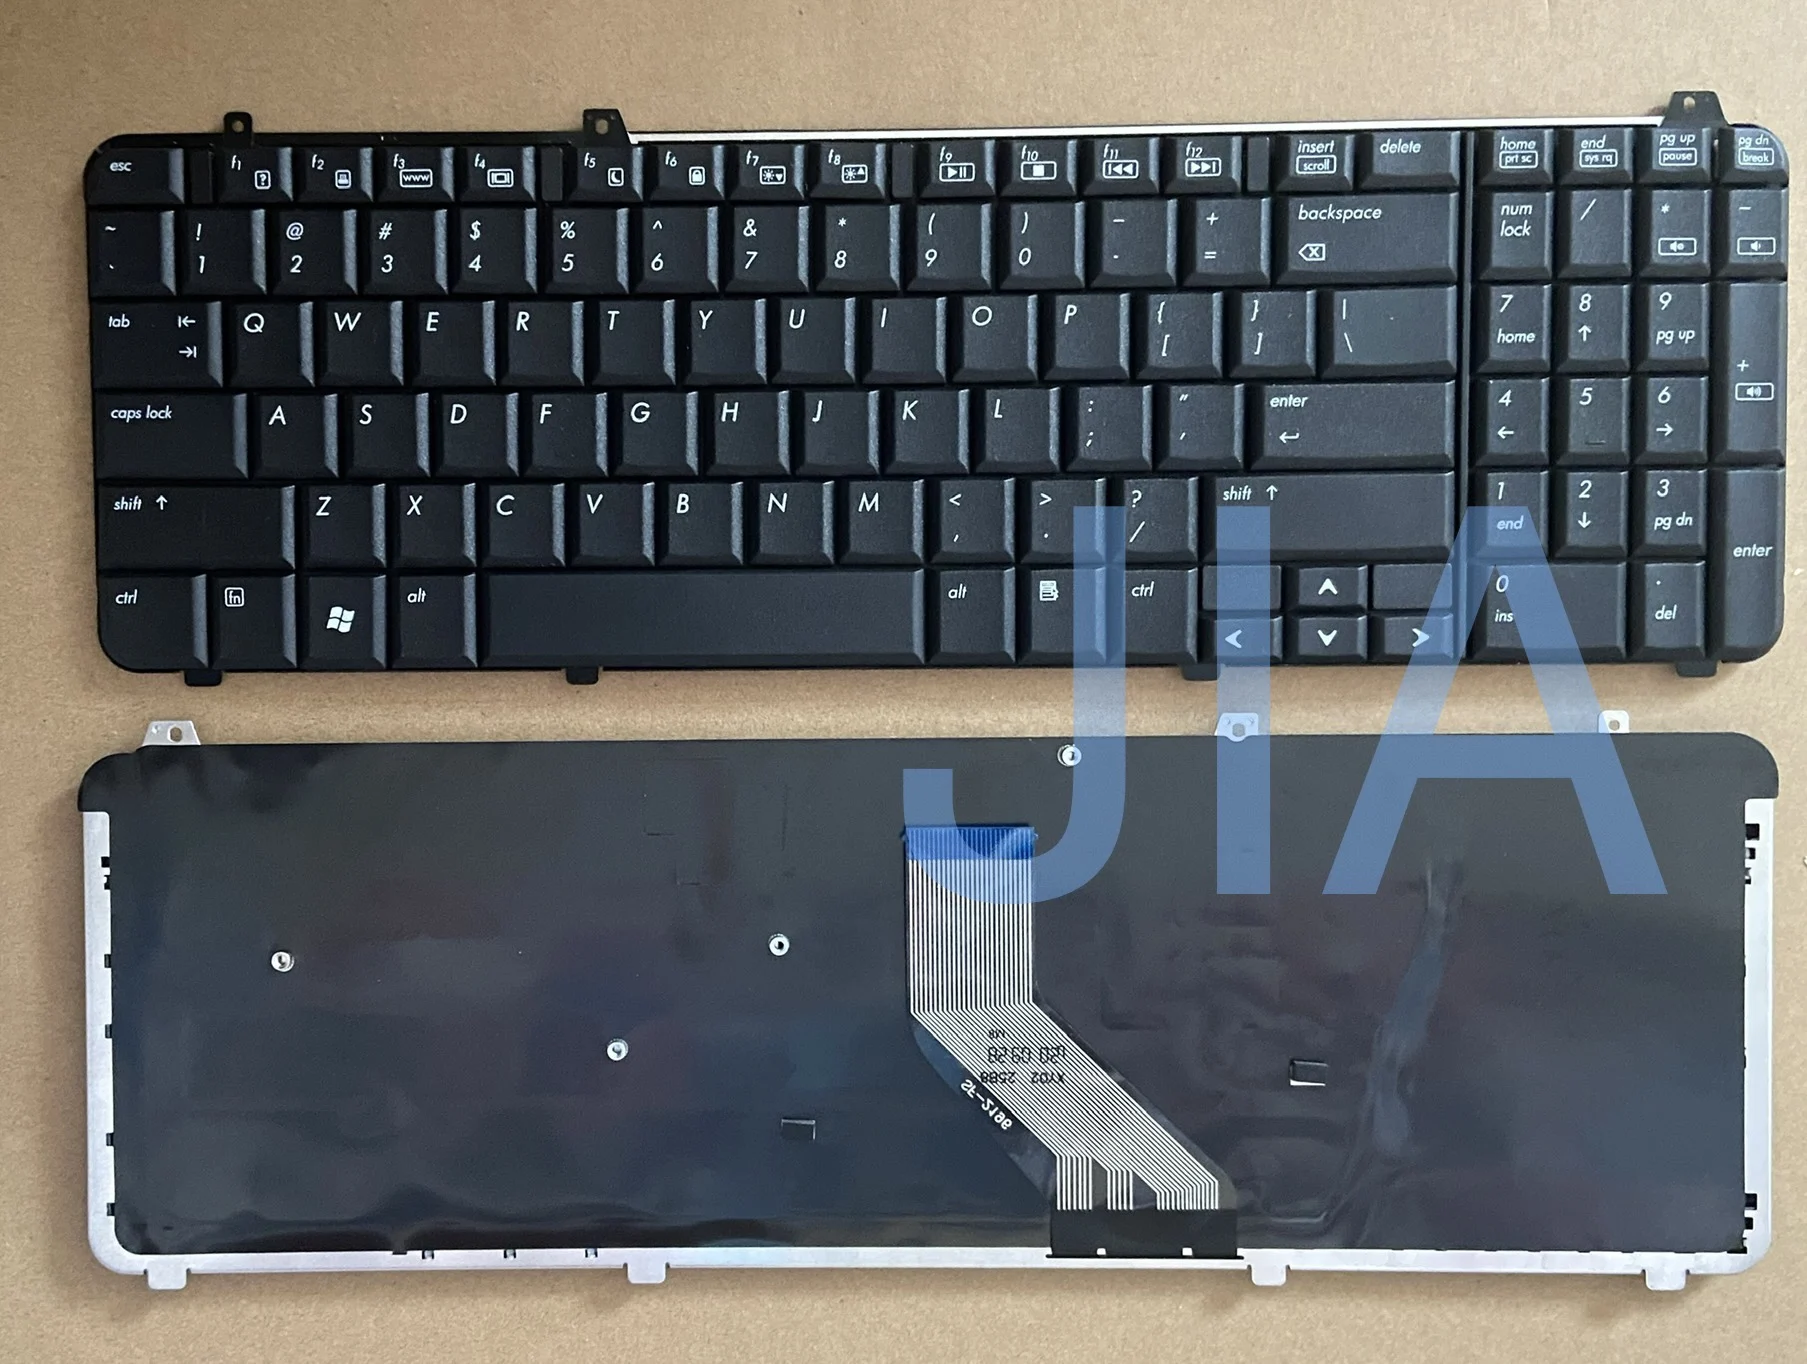 

Replacement Keyboard For HP Pavilion DV6-1000 DV6-1100 DV6-1200 DV6-1300 DV6-2000 DV6-2100 Laptop Black